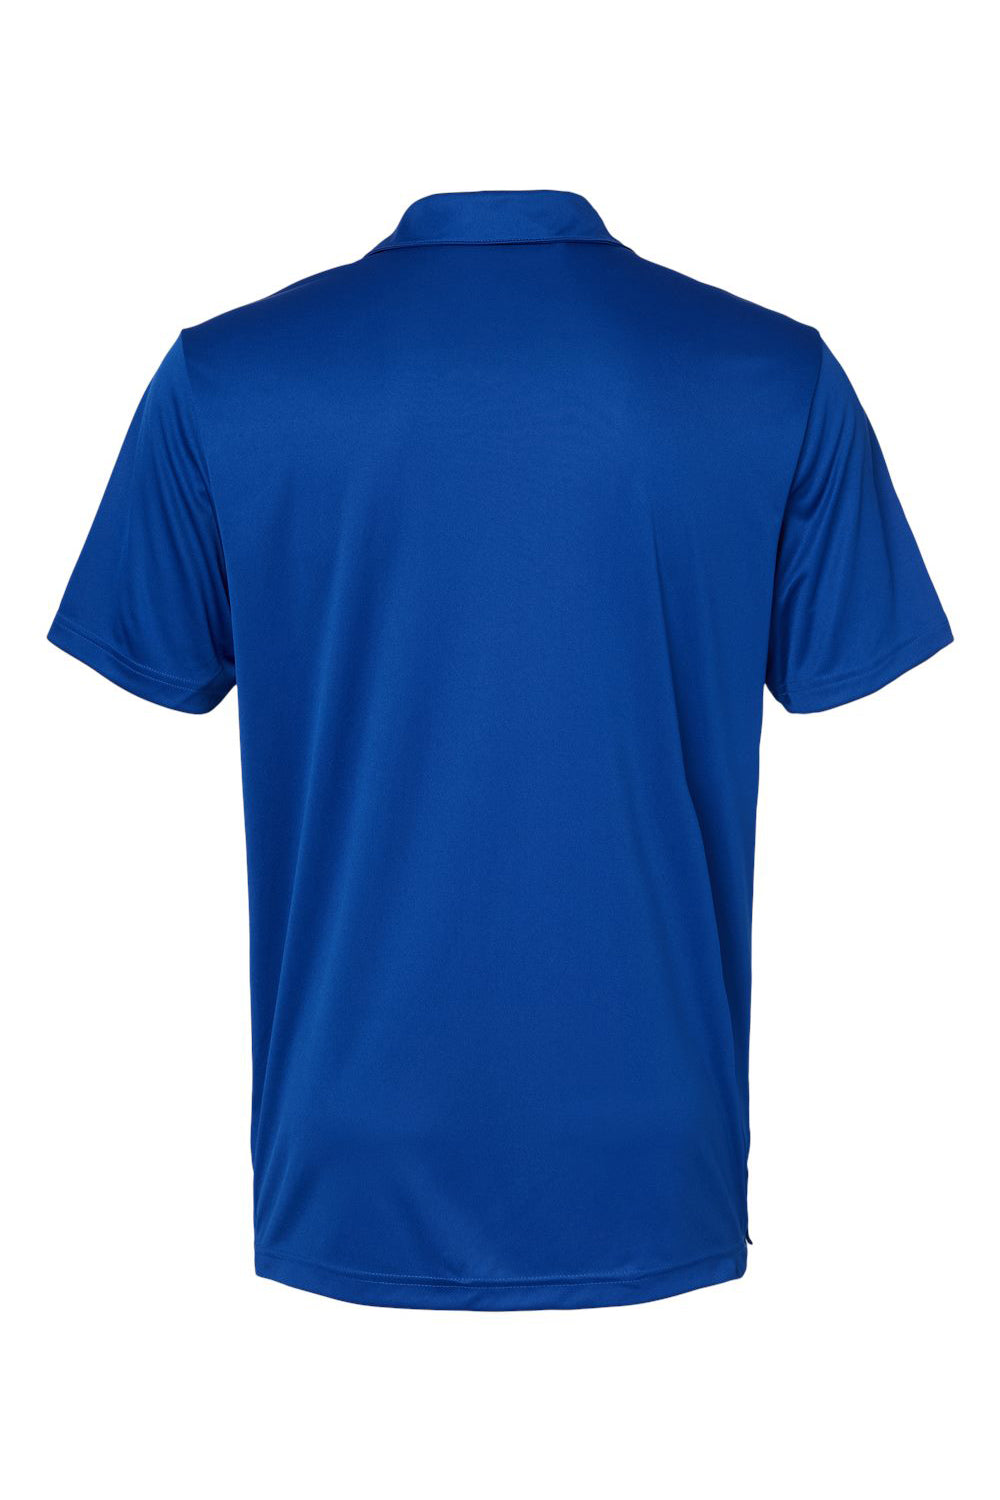 Adidas A324 Mens 3 Stripes UPF 50+ Short Sleeve Polo Shirt Collegiate Royal Blue/Grey Flat Back